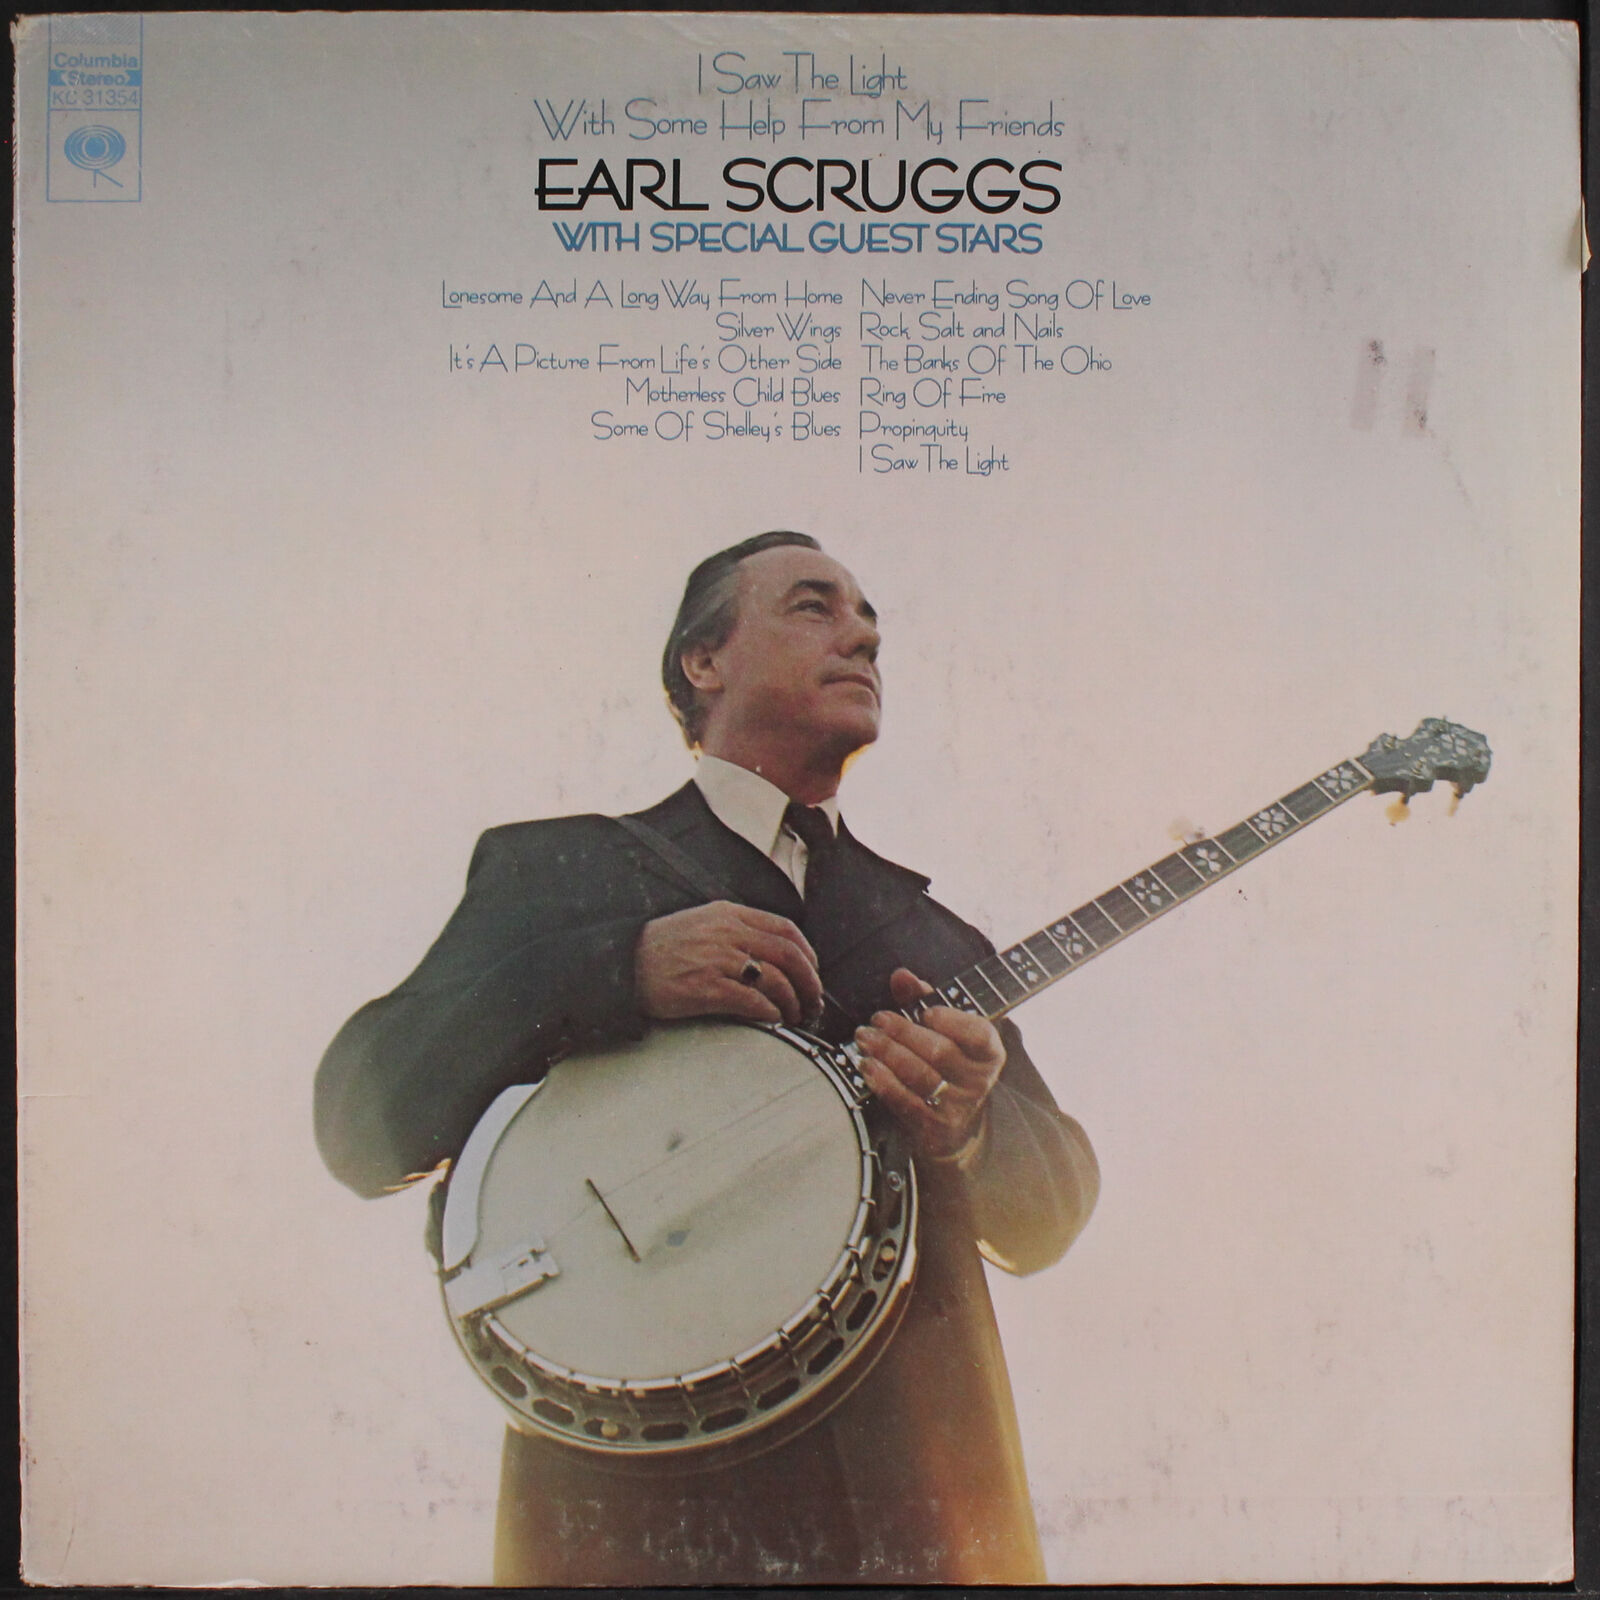 Banjo Revolutionary: Celebrating 100 Years of Earl Scruggs